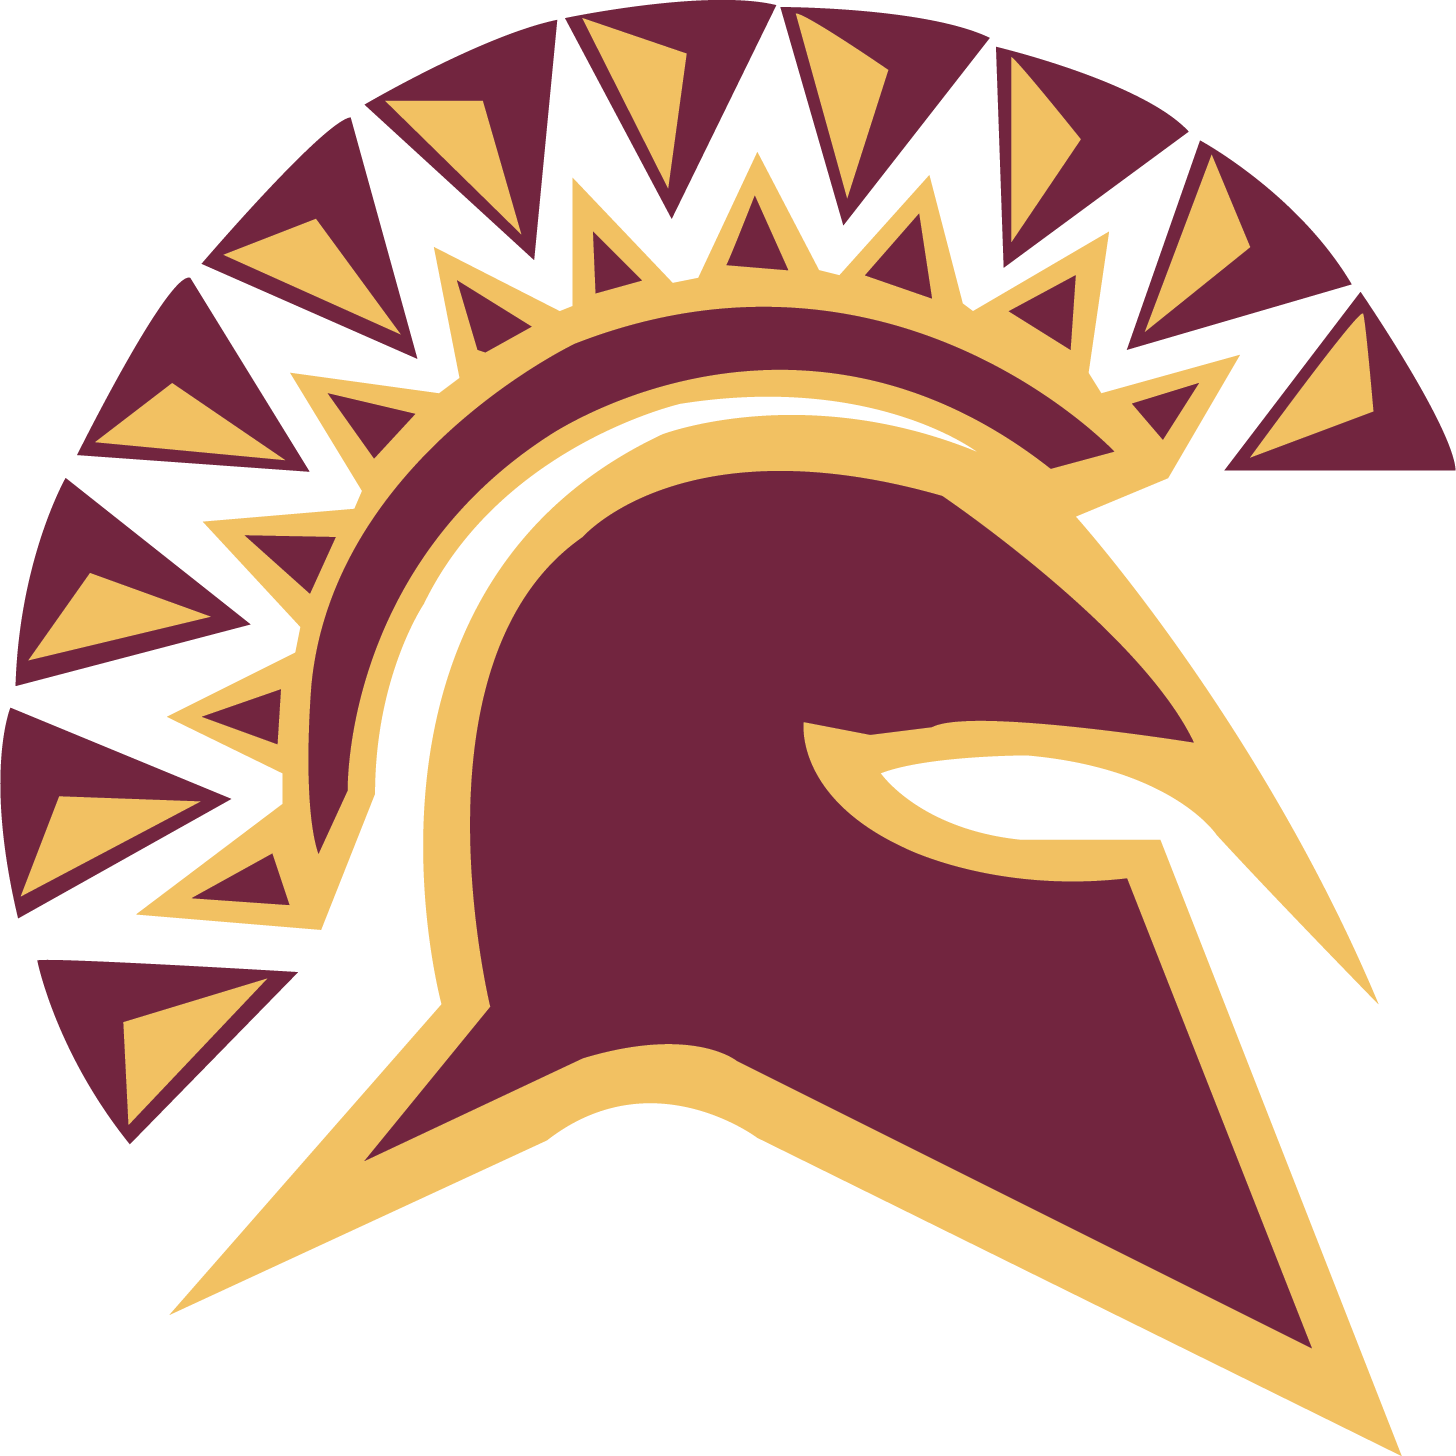 Spartan - St. Thomas Aquinas College mascot